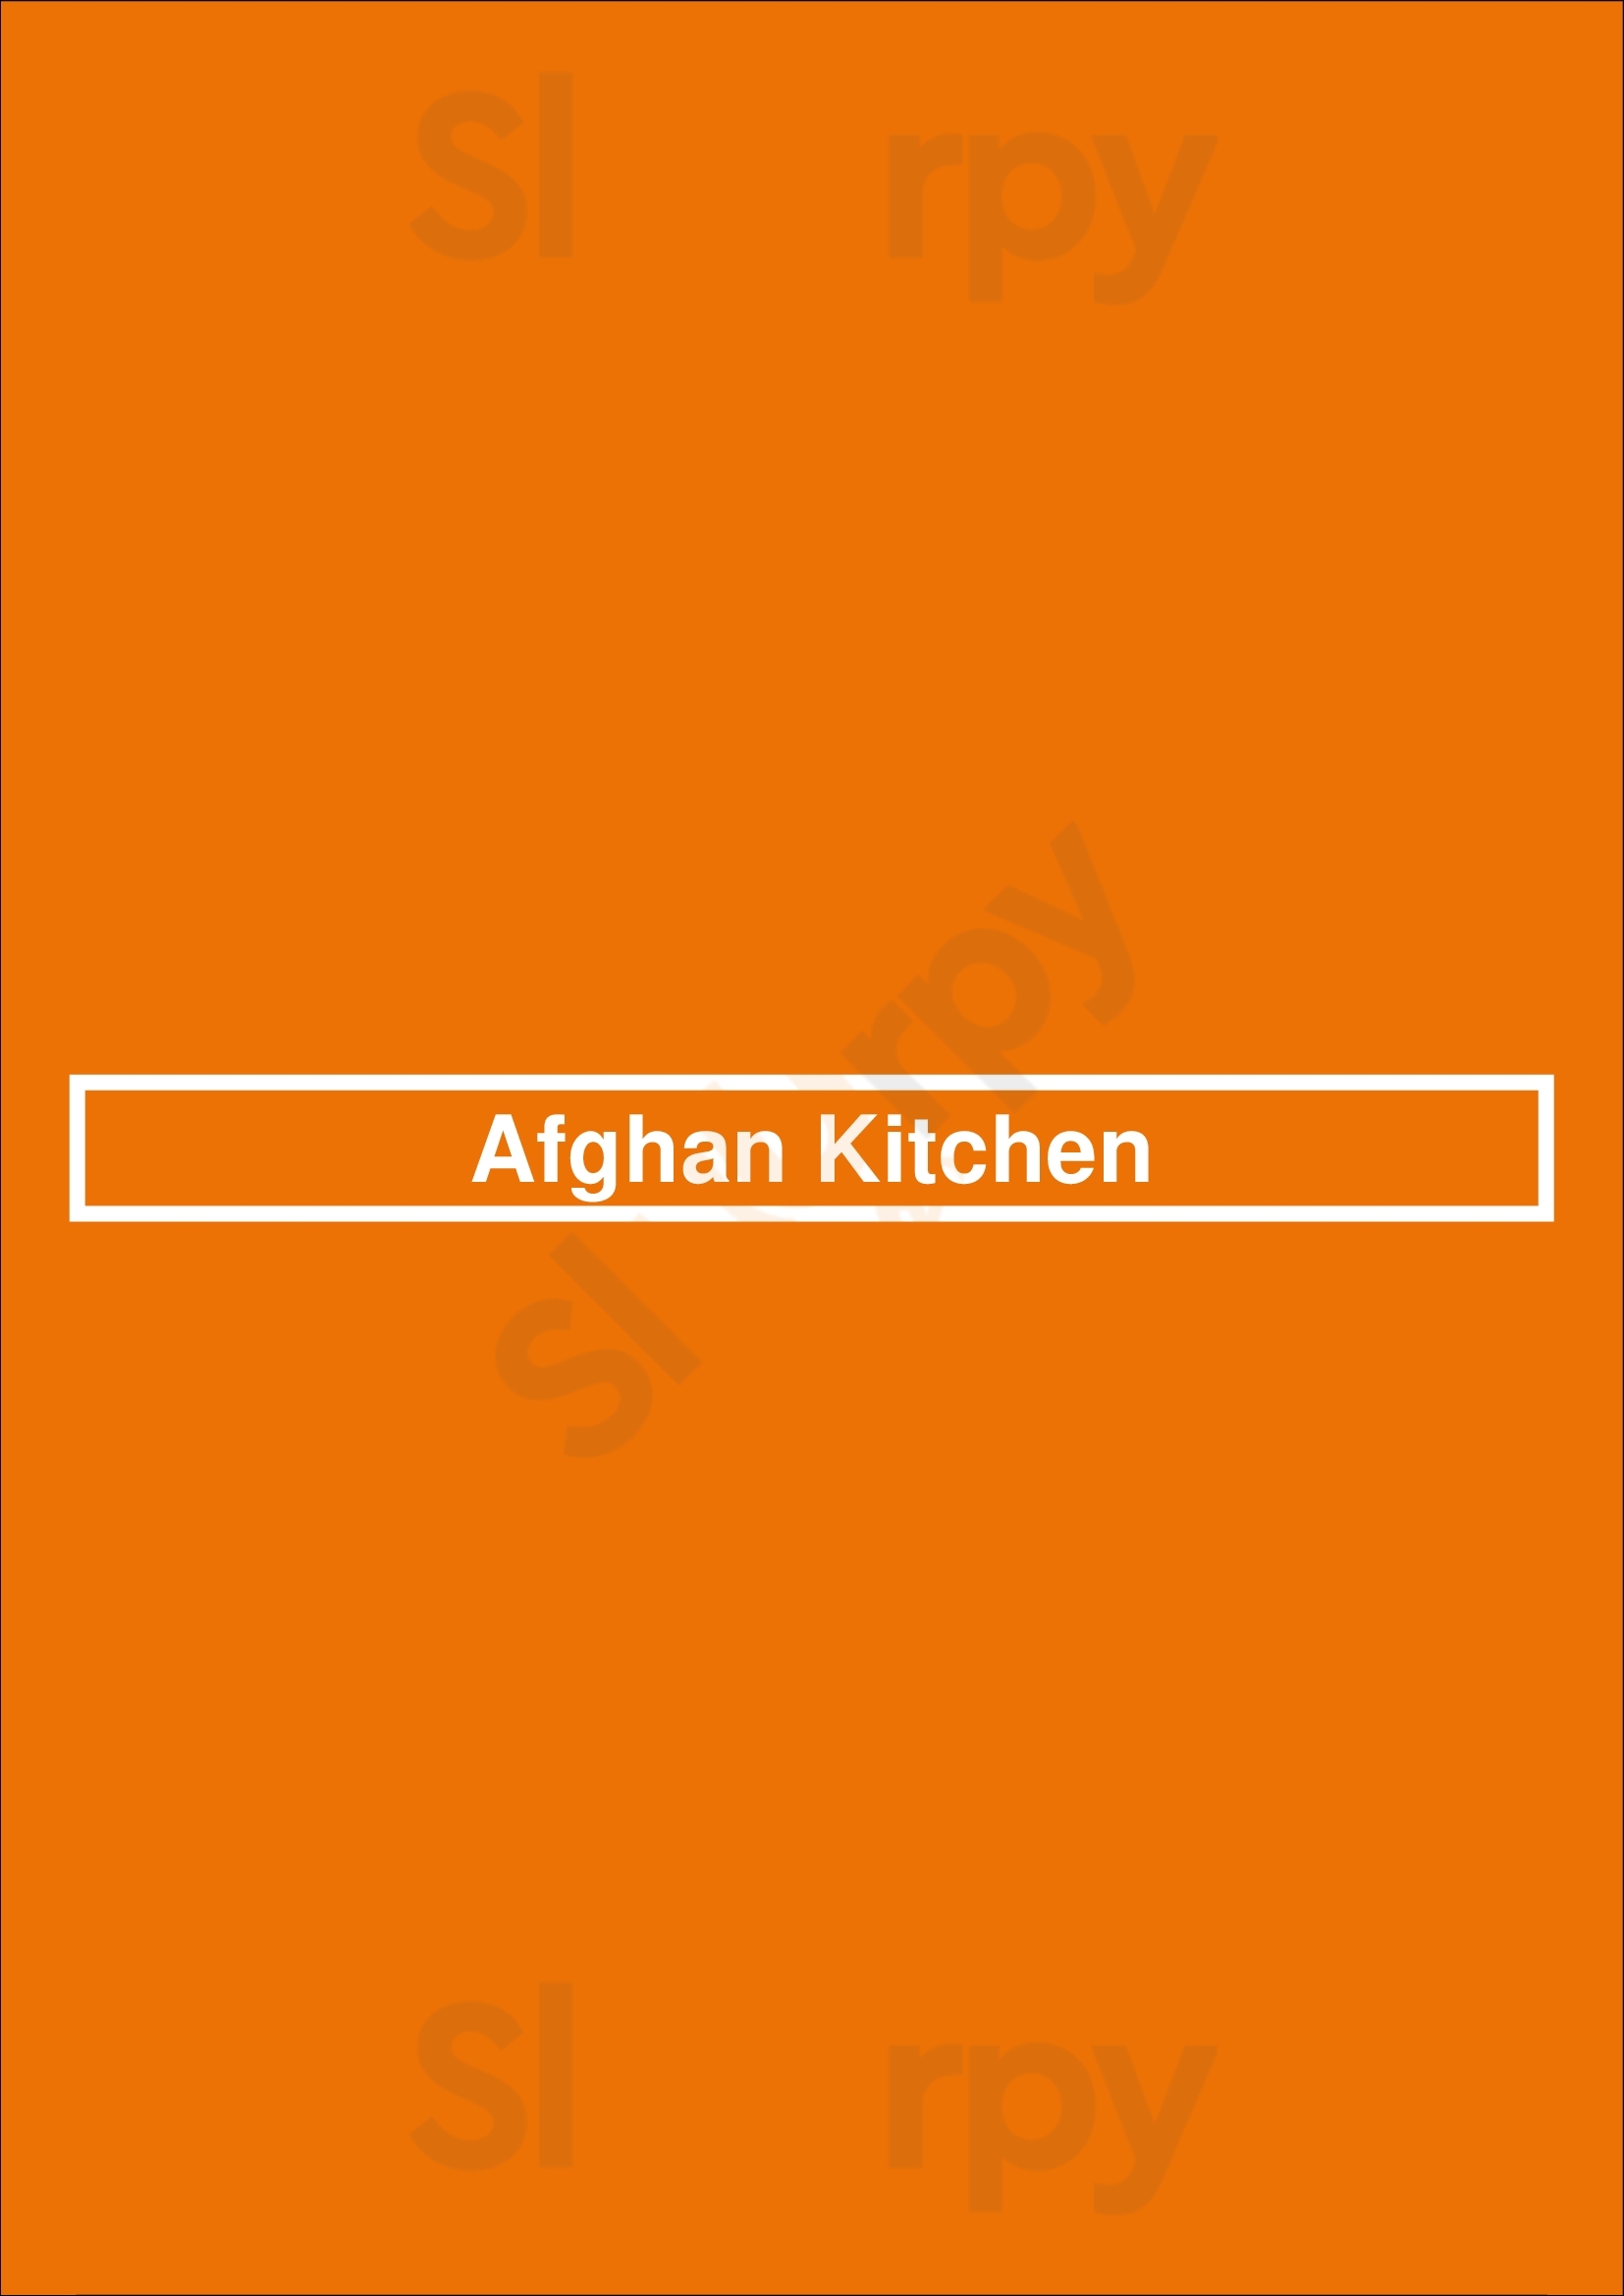 Afghan Kitchen Surrey Menu - 1